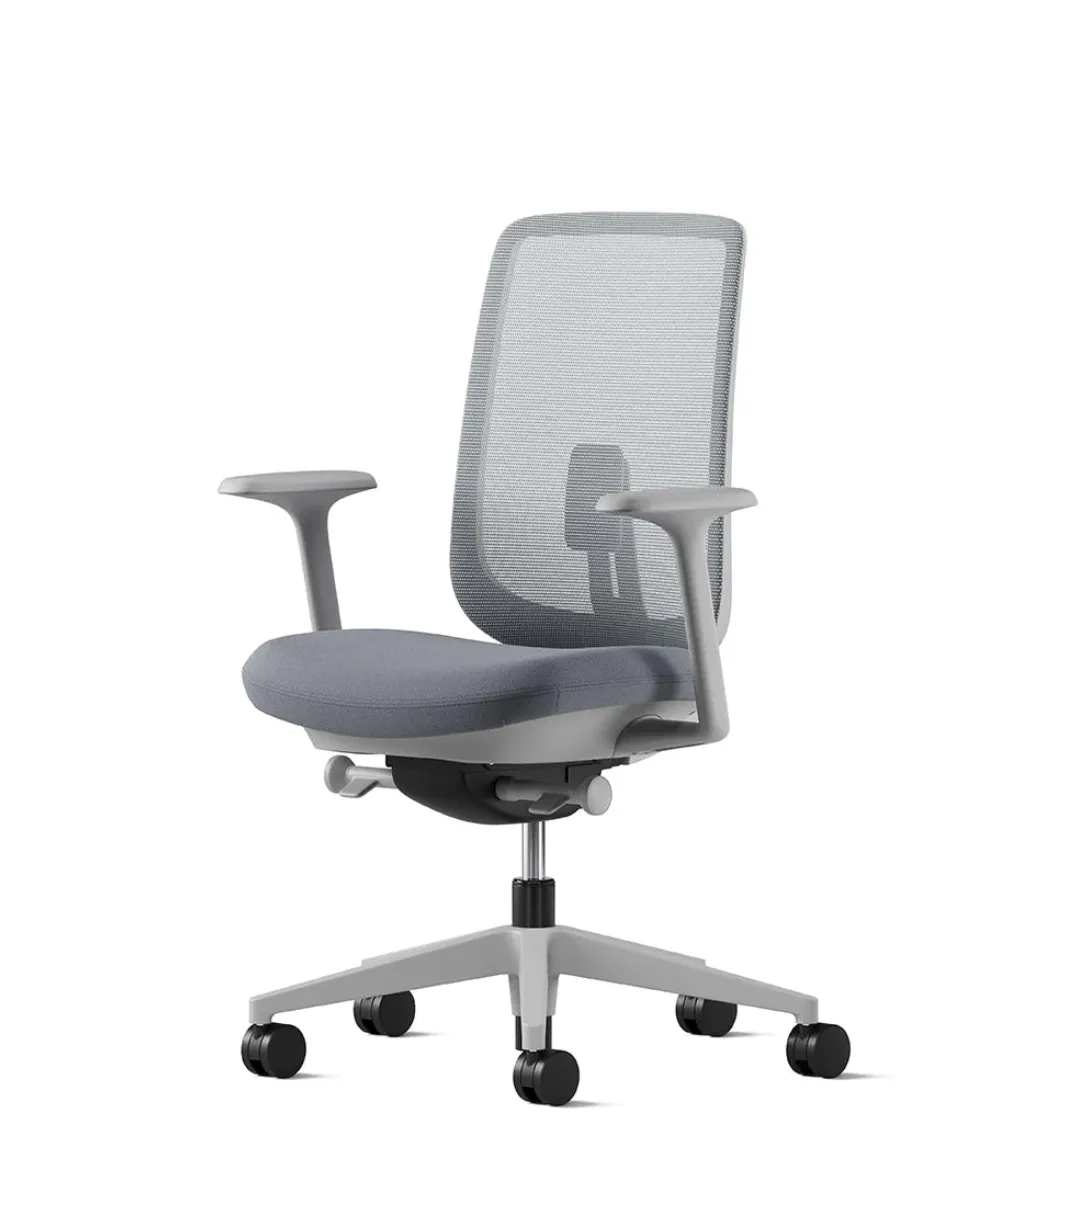 Grey Verus Suspension Office Chair on whtie background